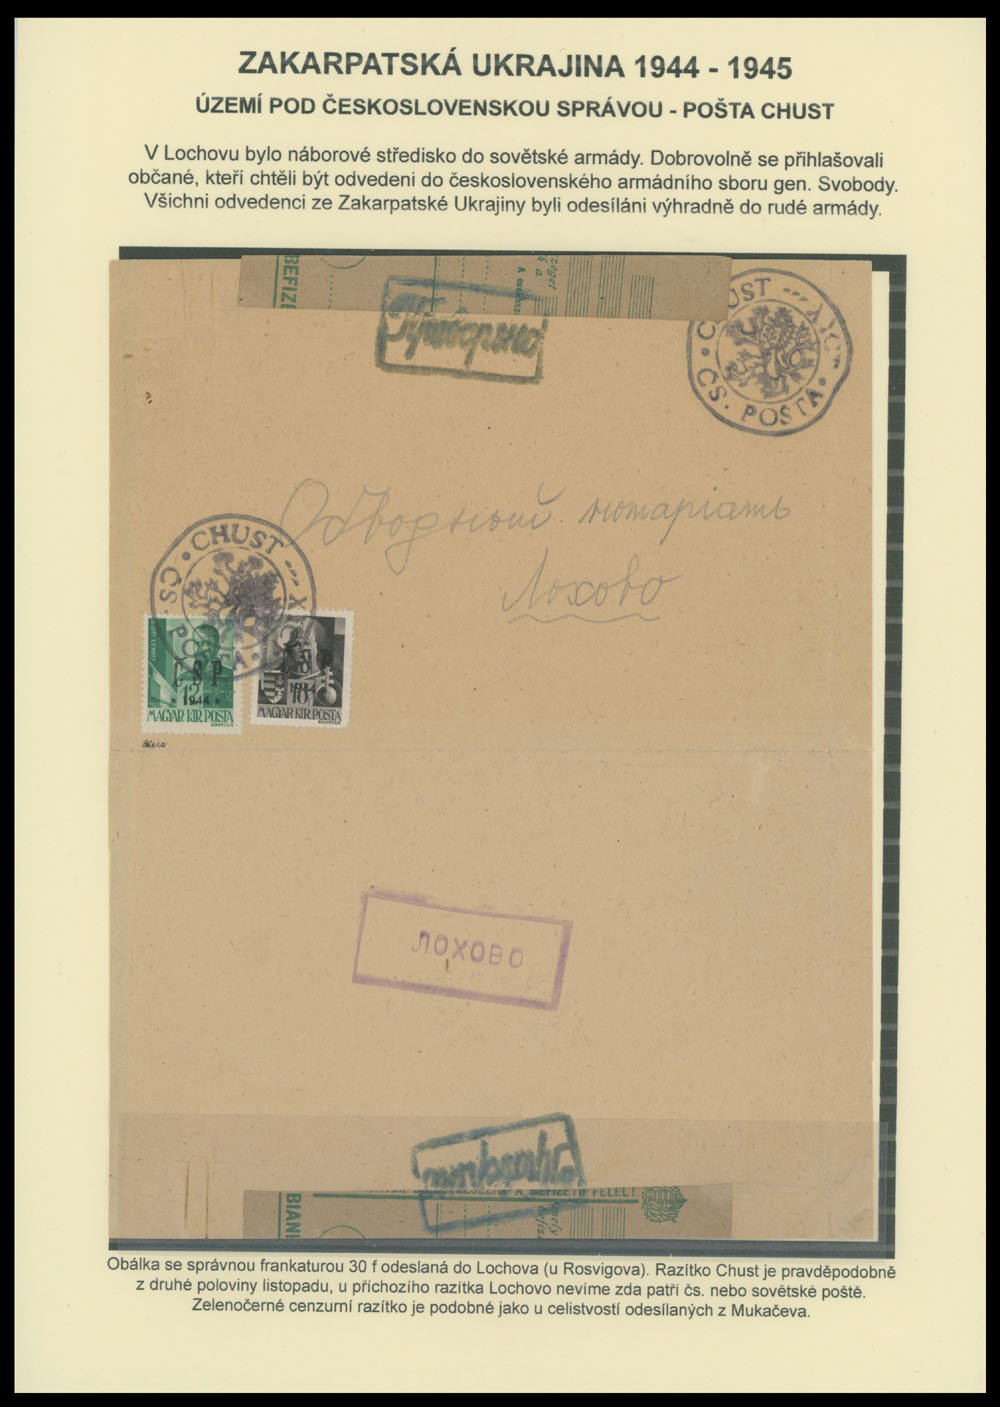 Lot 17 - 3. Chust Postal History items  -  Raritan Stamps Inc. The Jiří Majer Collection of Carpatho - Ukraine 1944-1945, Live Bidding Auction #98